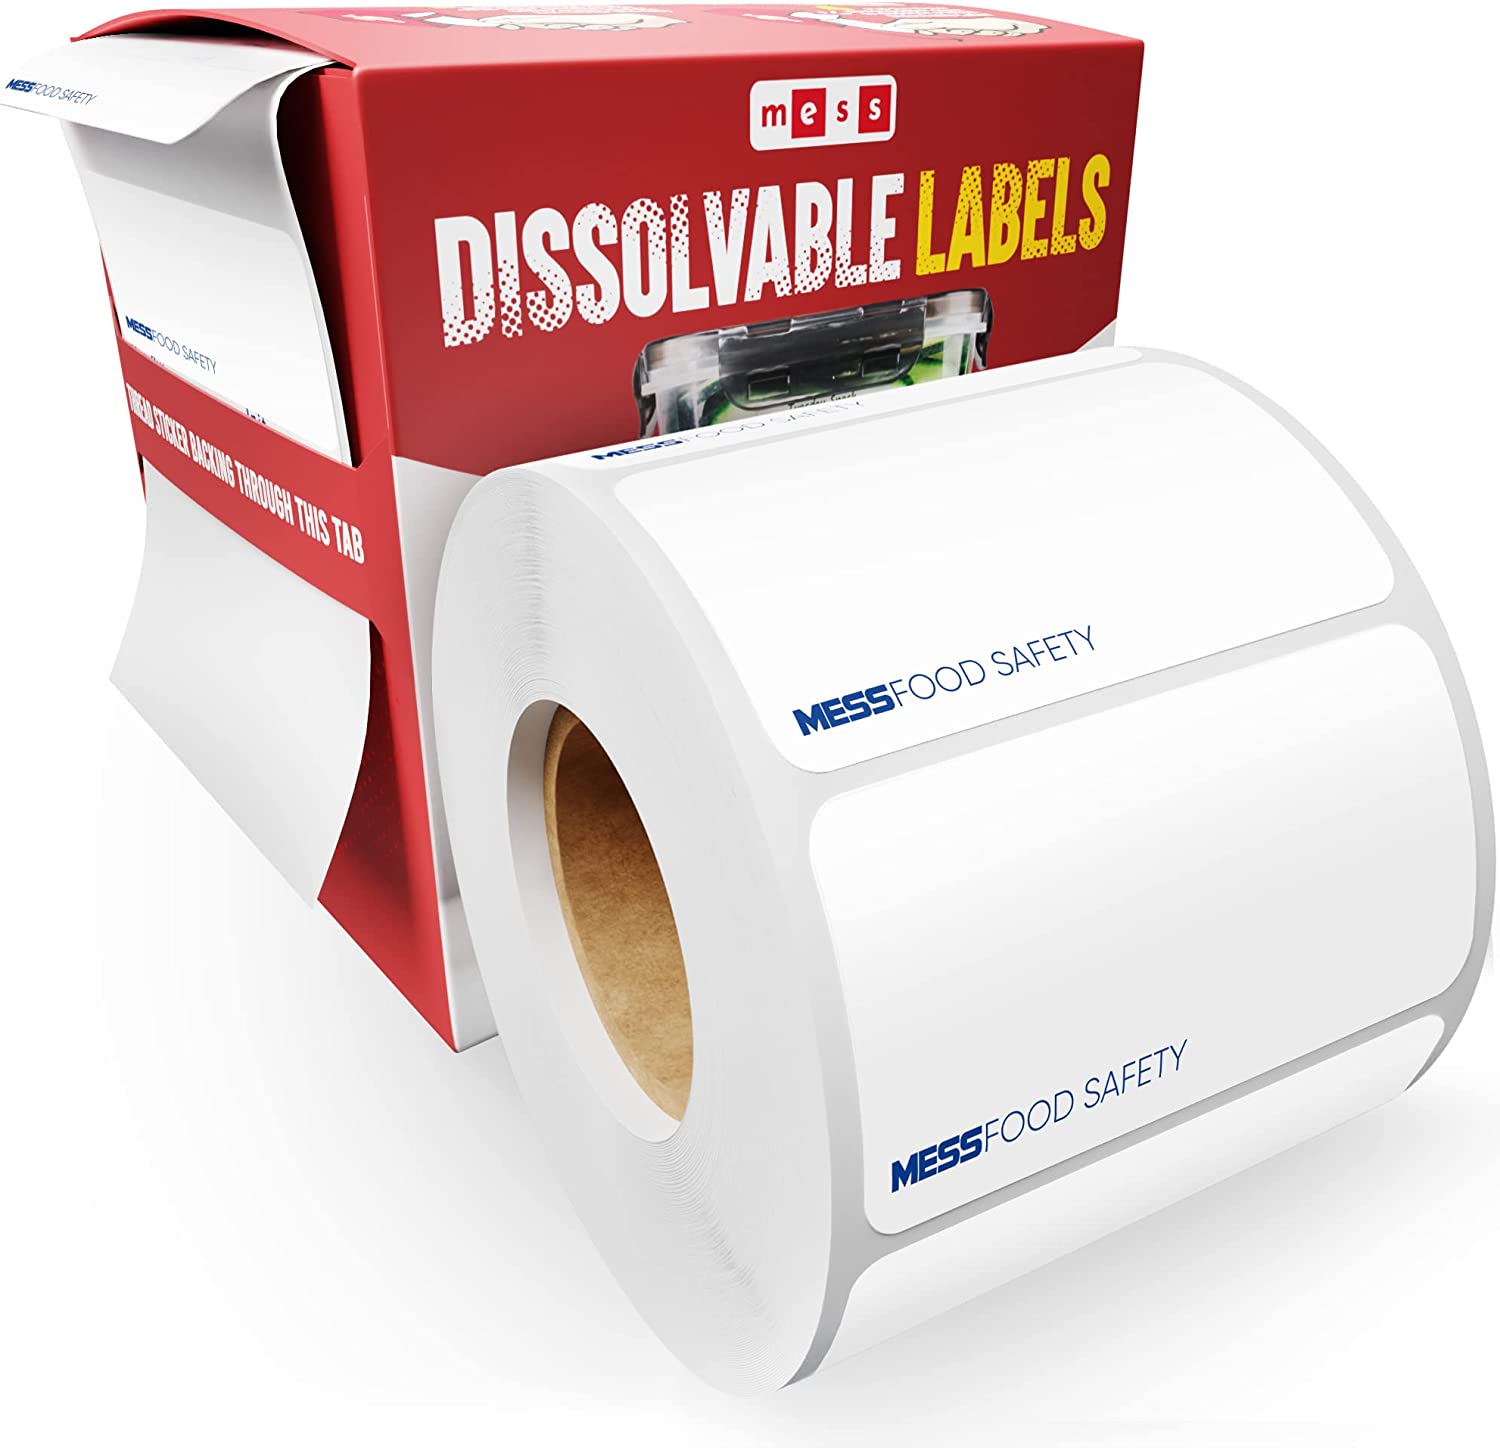 Dissolvable Kraft Paper Canning Stickers - MESS BRANDS